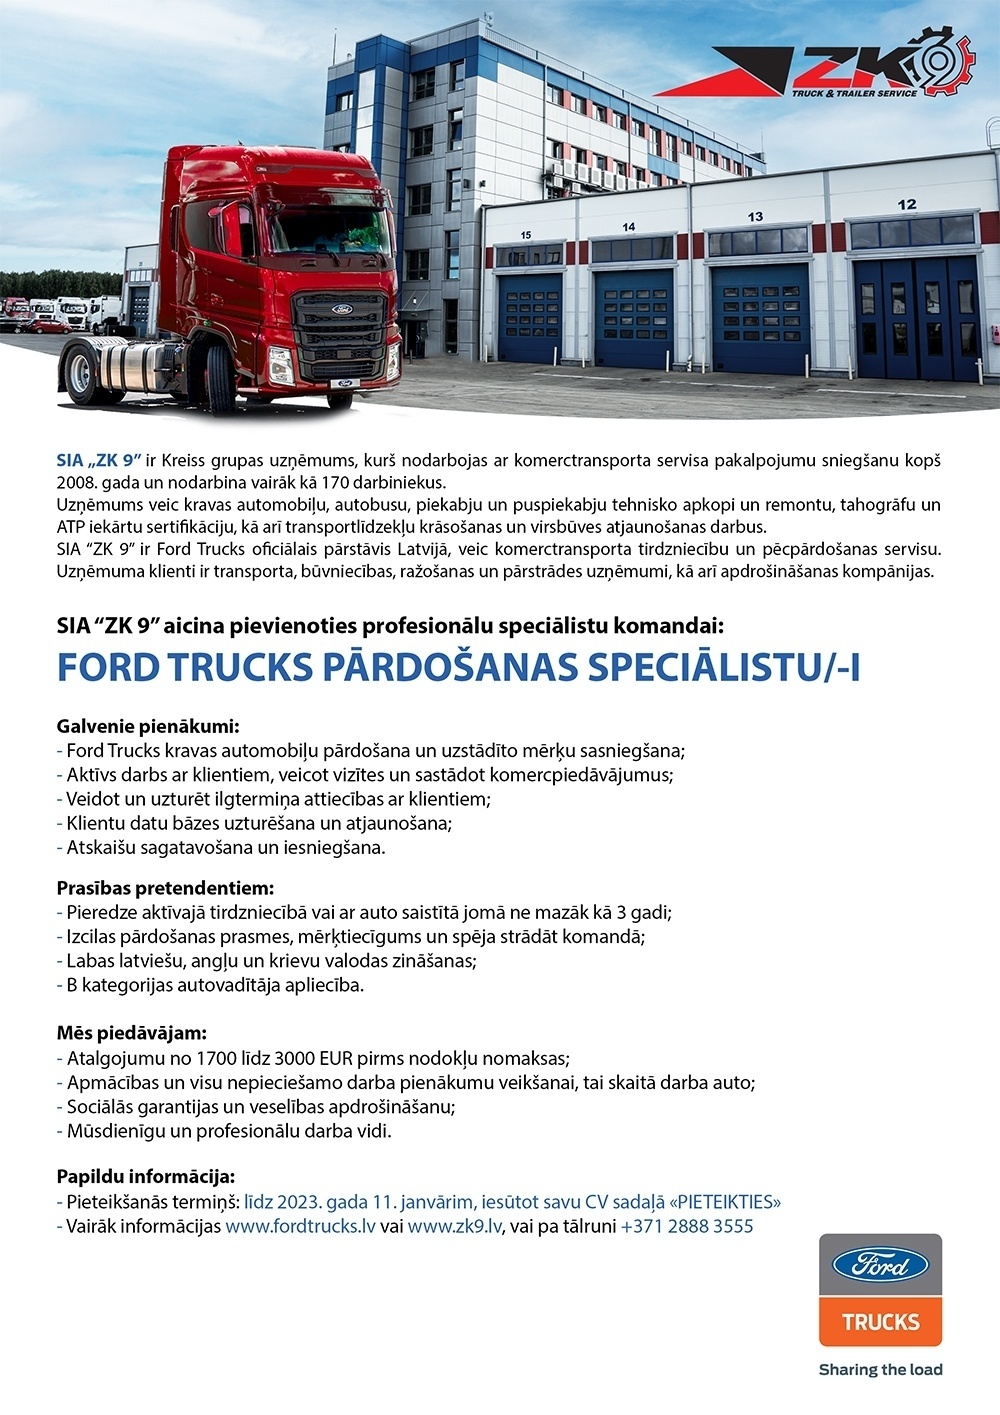 ZK 9, SIA Ford Trucks pārdošanas speciālists/-e